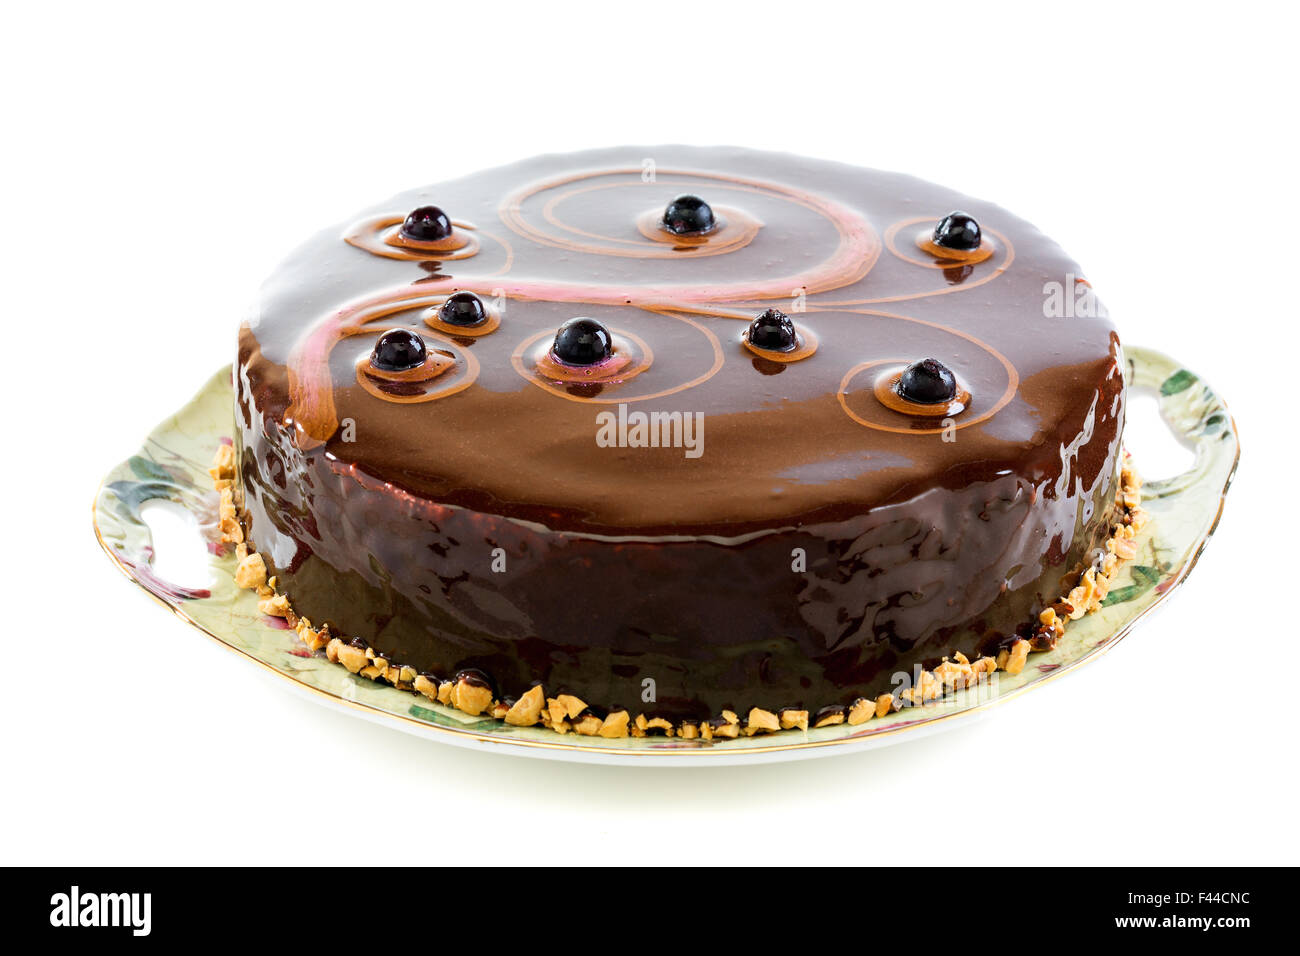 Cake with chocolate icing. Stock Photo